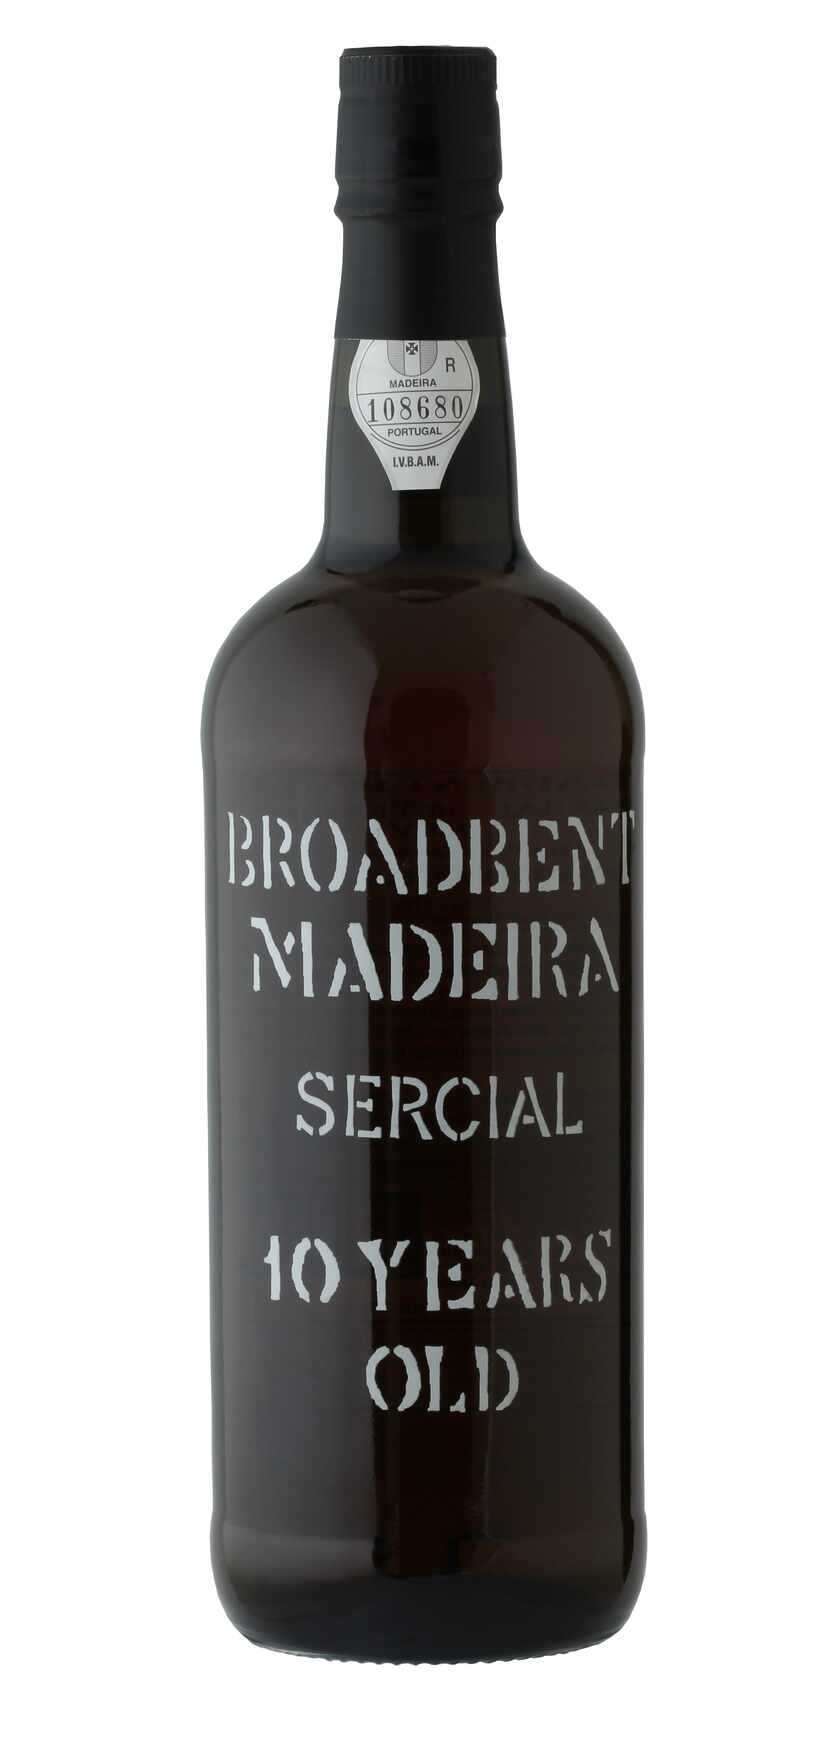 Broadbent Sercial Madeira 10-Year-Old, NV, Portugal